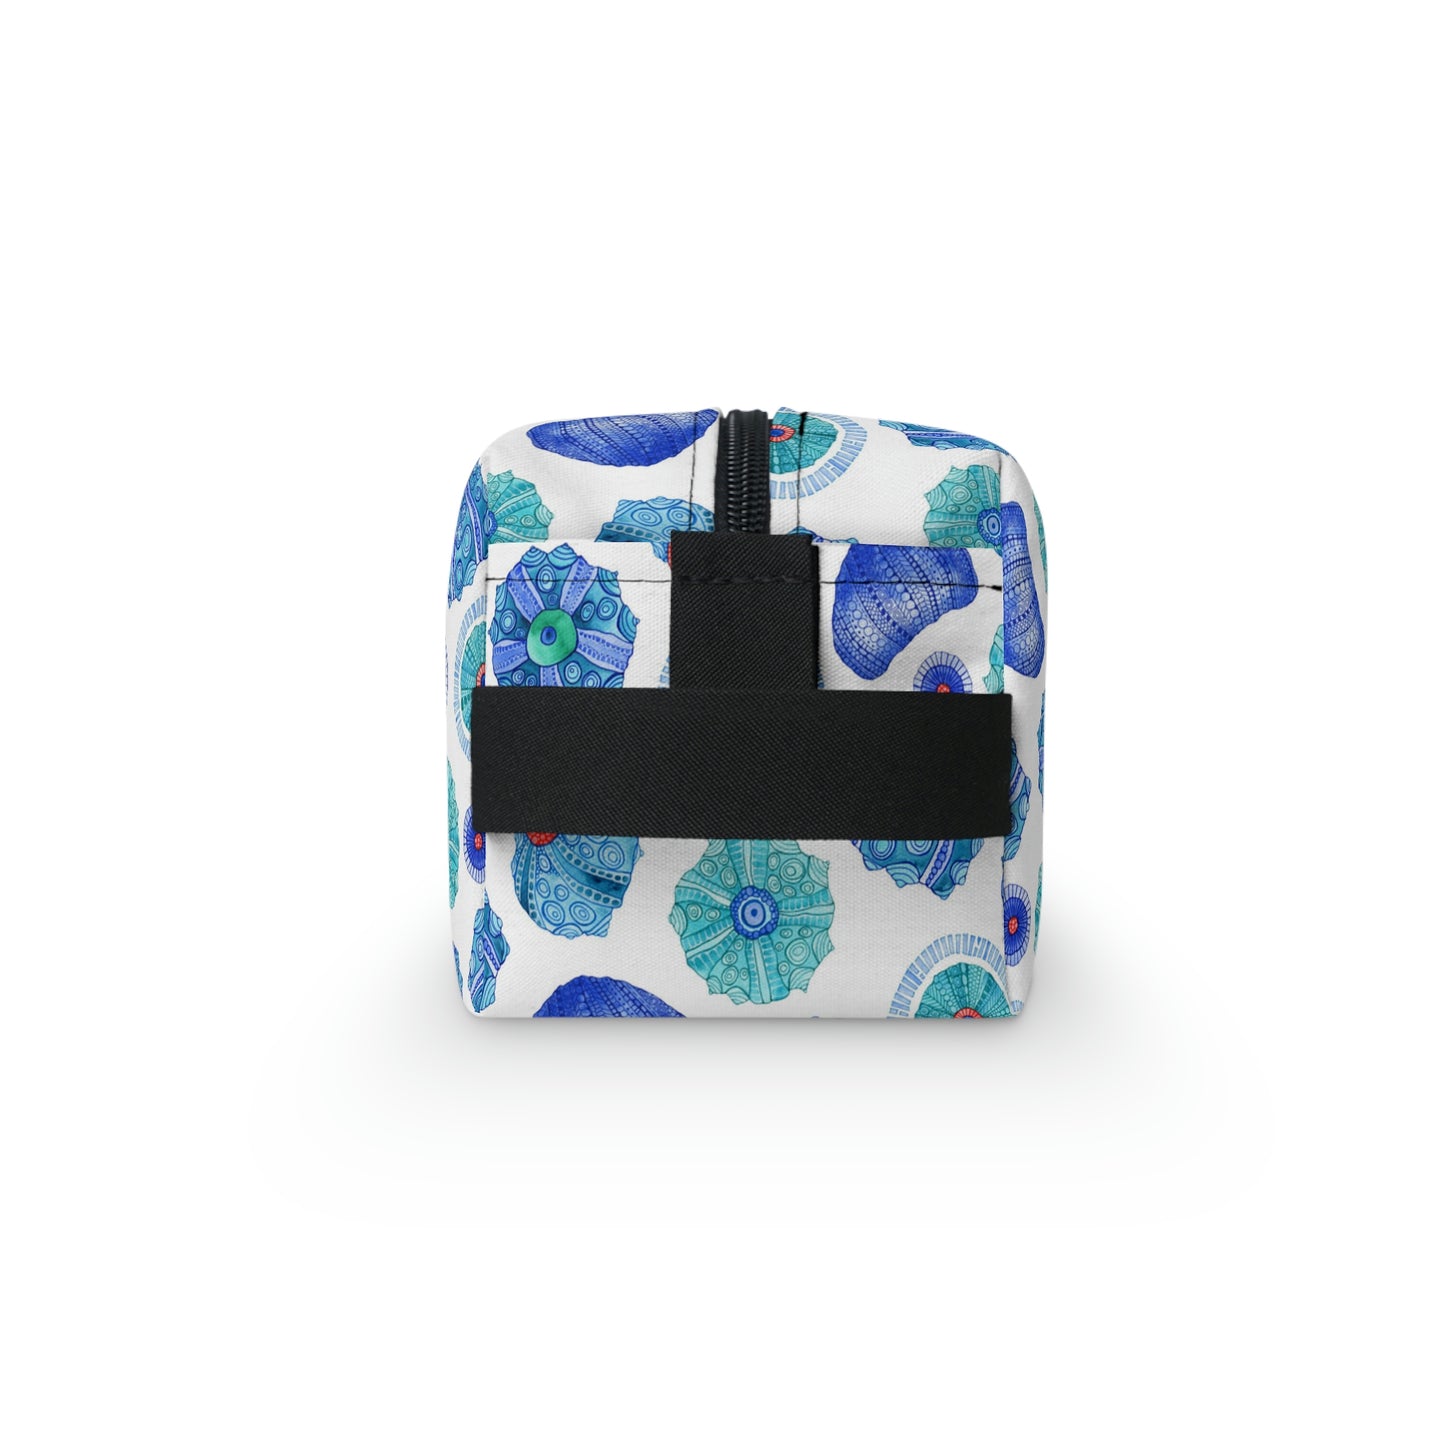 Sea Urchins- Dopp Kit Toiletry Bag